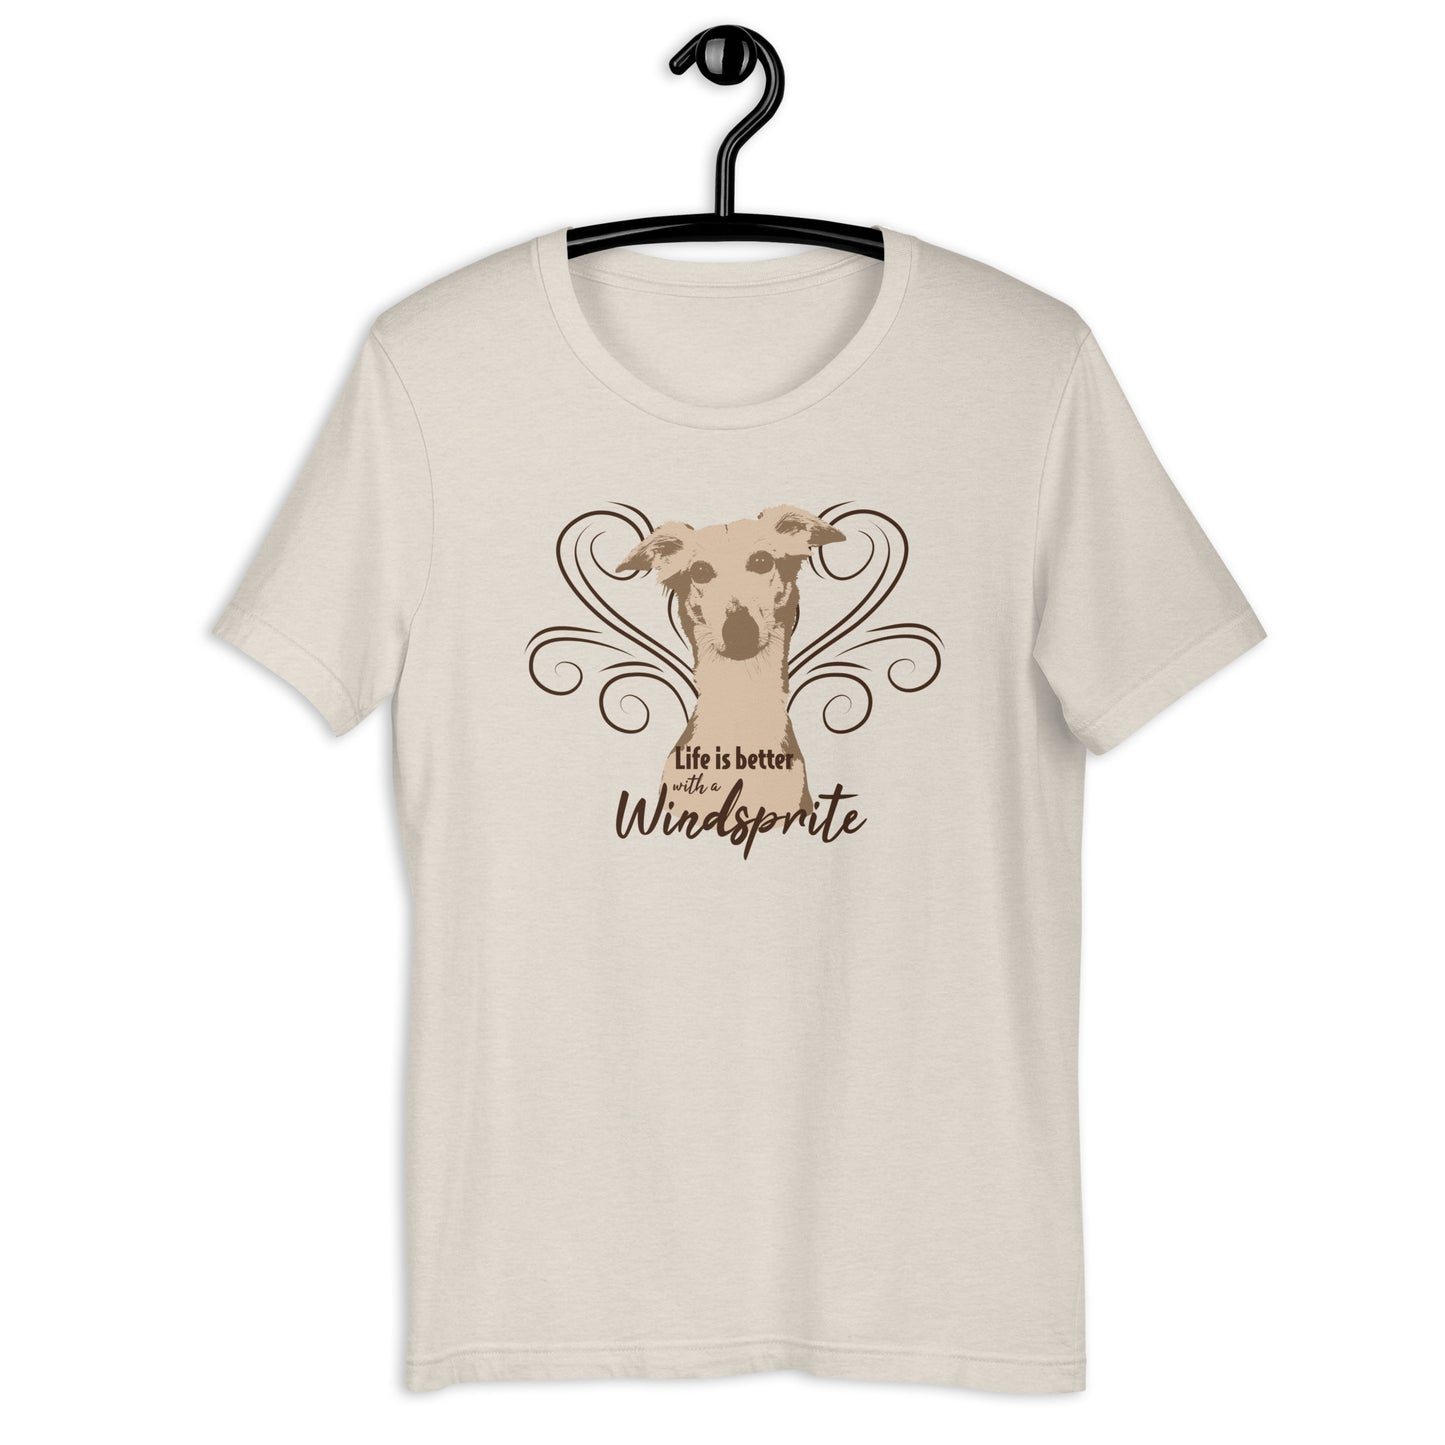 Life is better- Windsprite2 - Unisex t-shirt